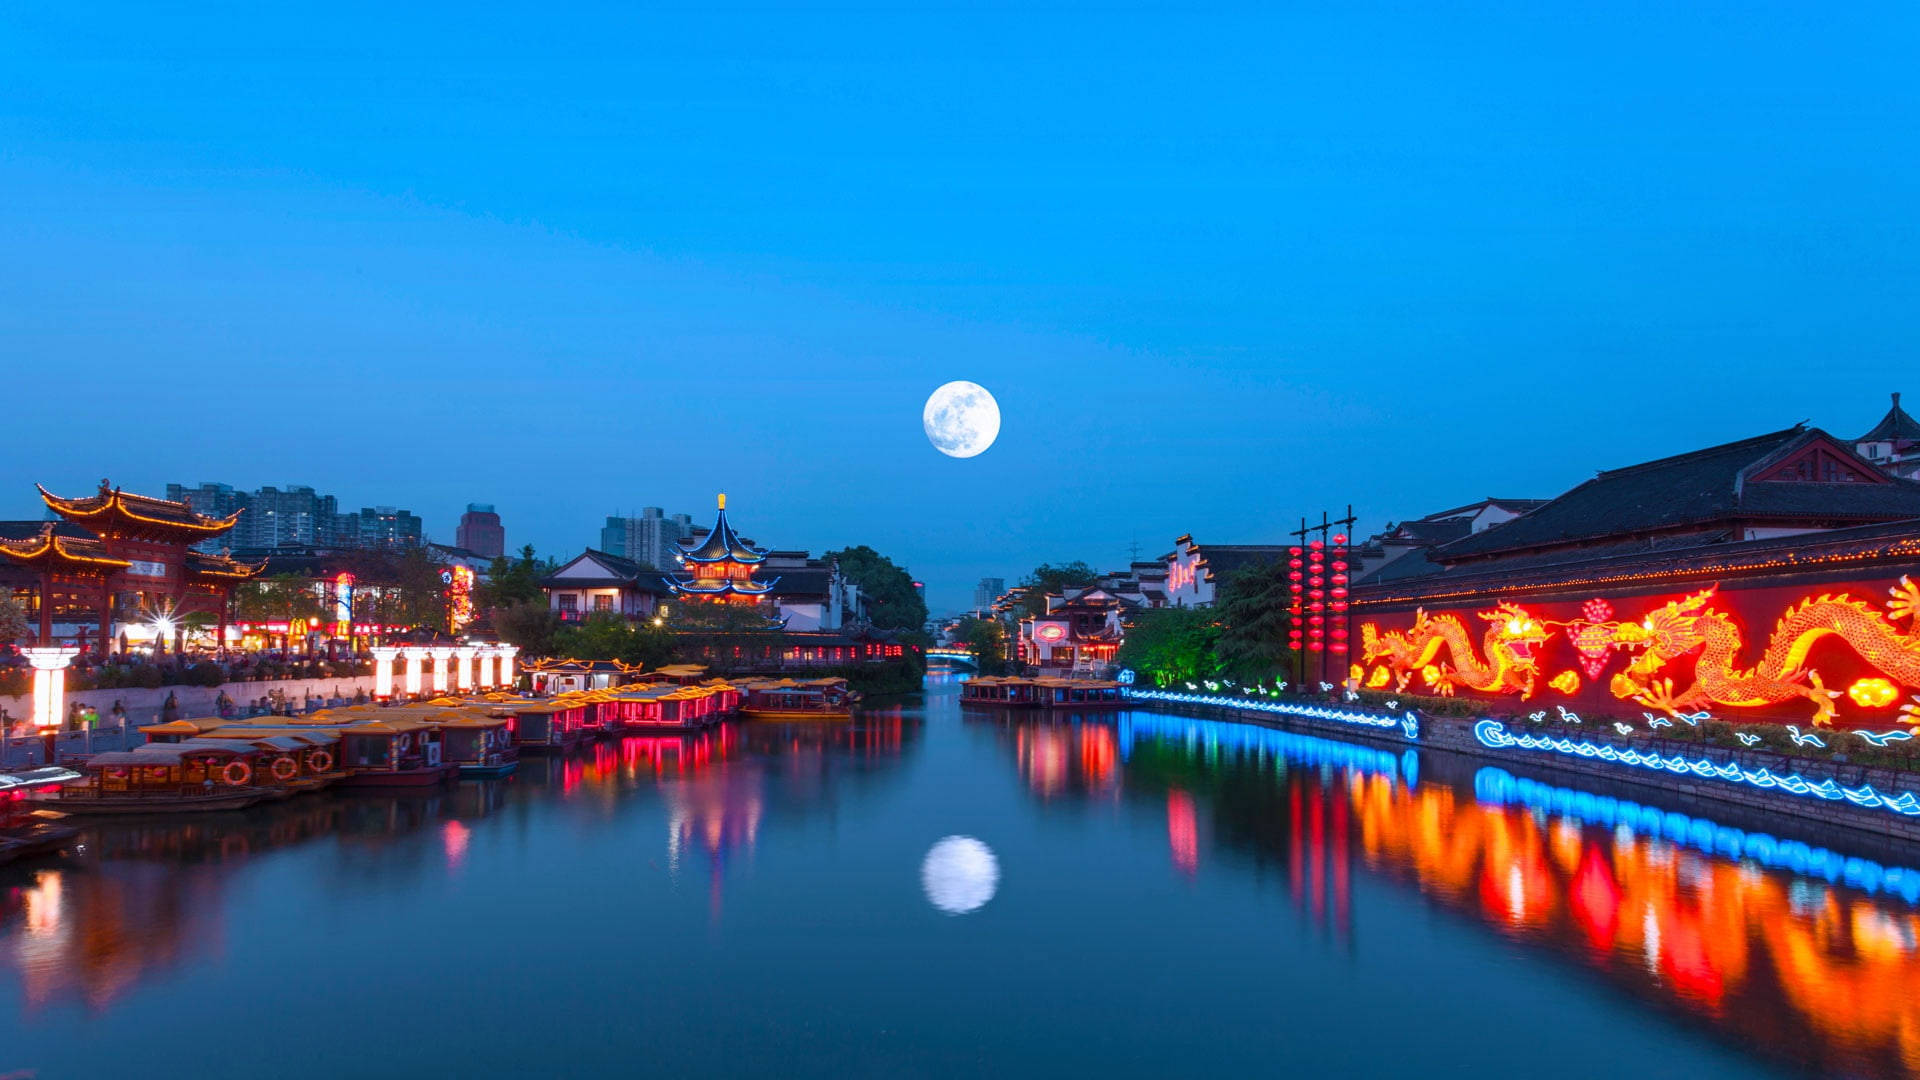 Nanjing Qinhuai River Festival Background